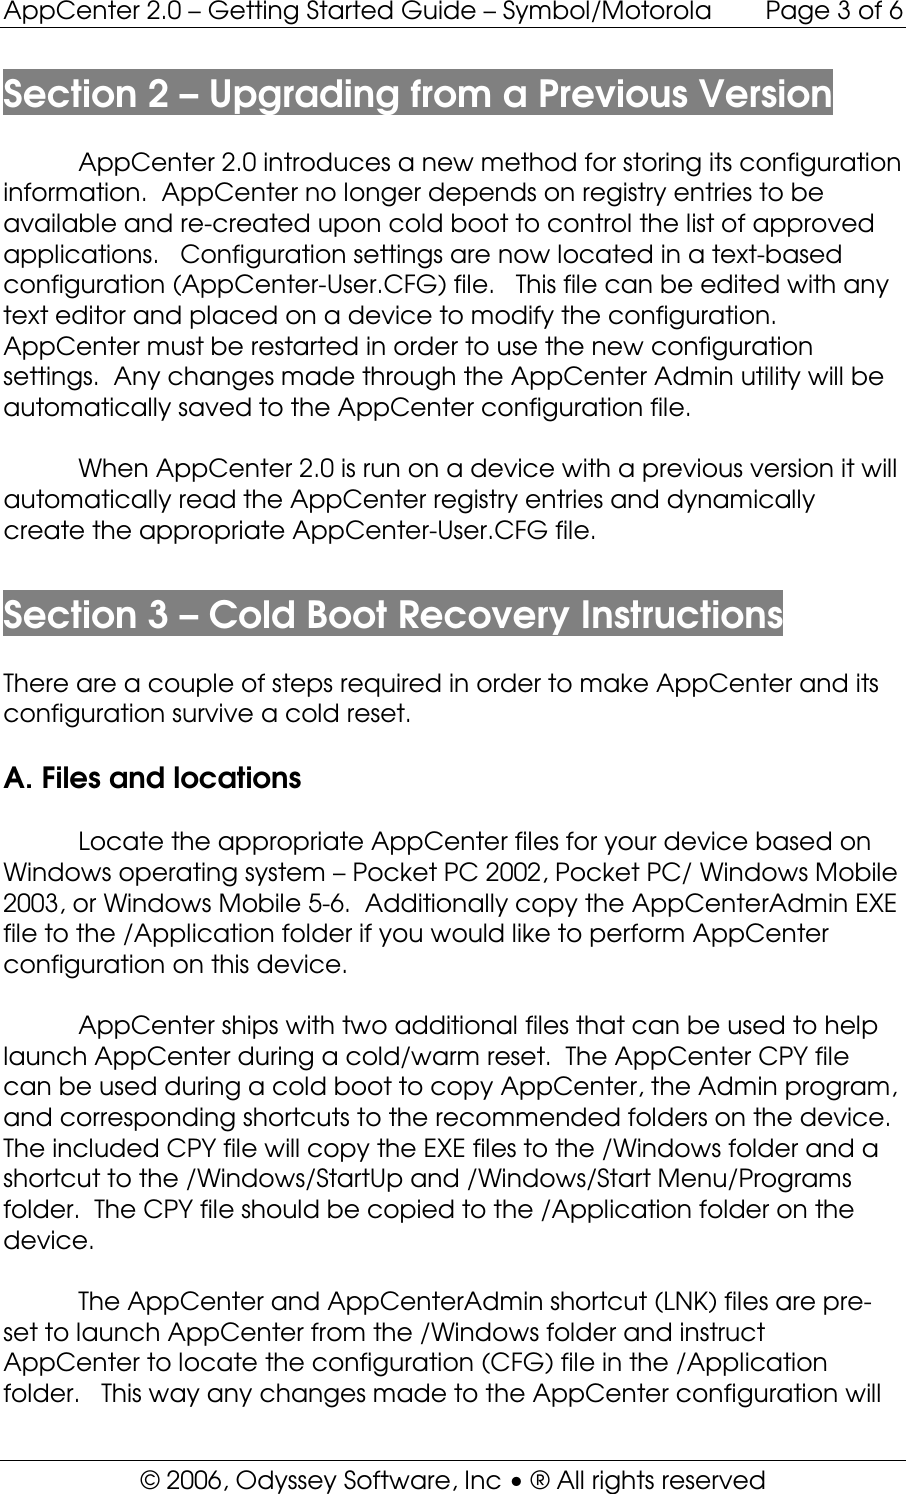 Page 4 of 6 - AppCenter 2.0 WM Getting Started Guide _Symbol-Motorola_ App Center (Symbol-Motorola)